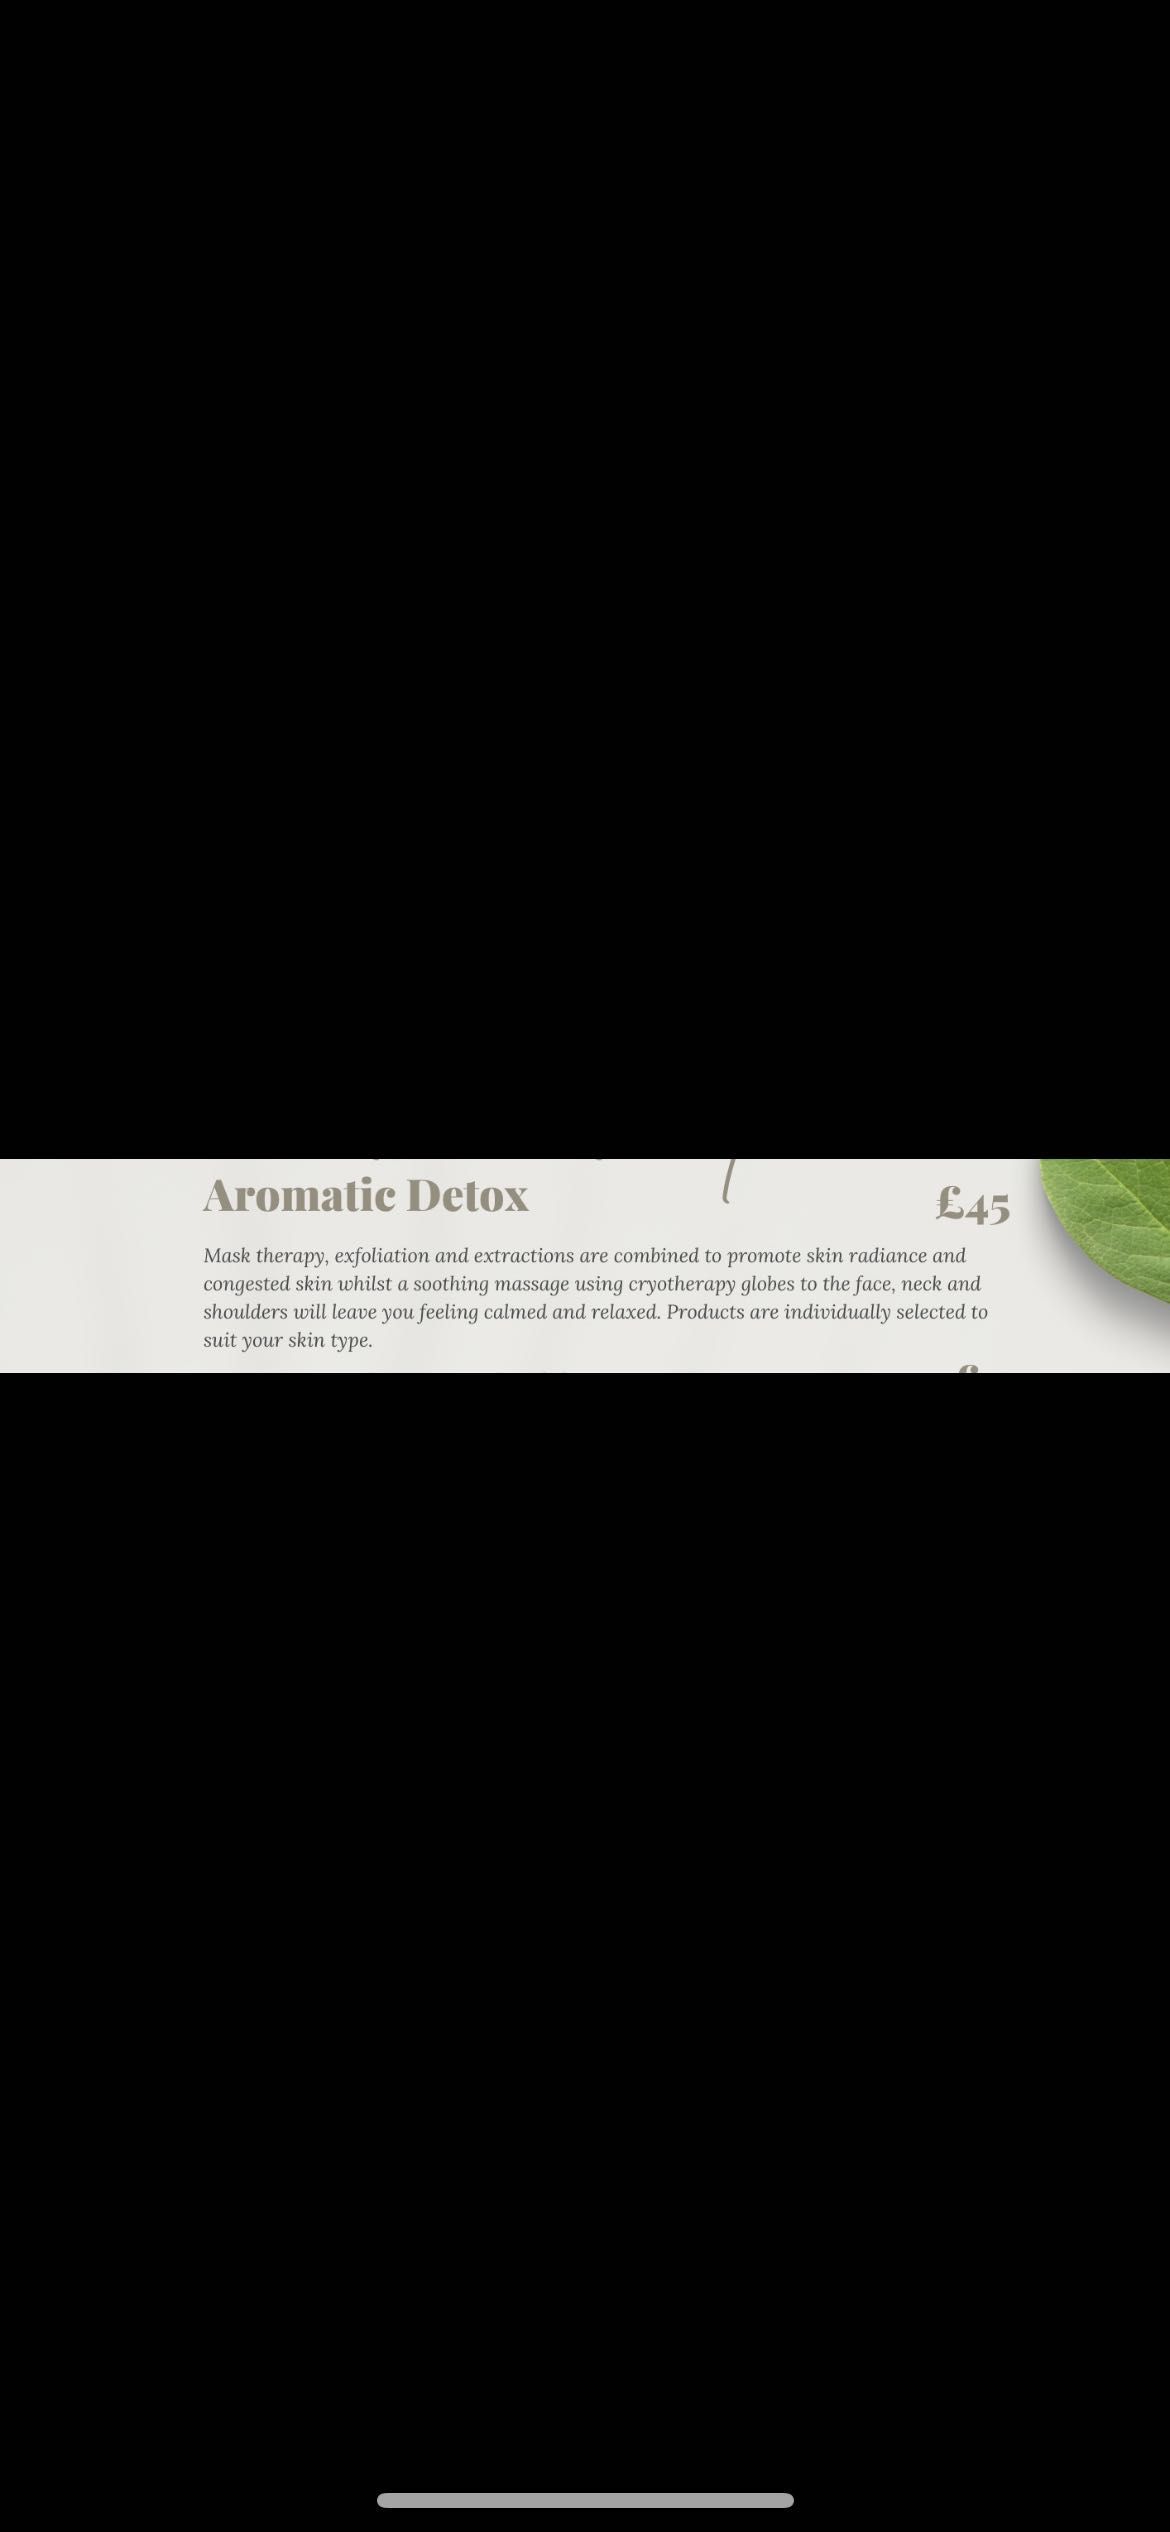 Aromatic Detox portfolio